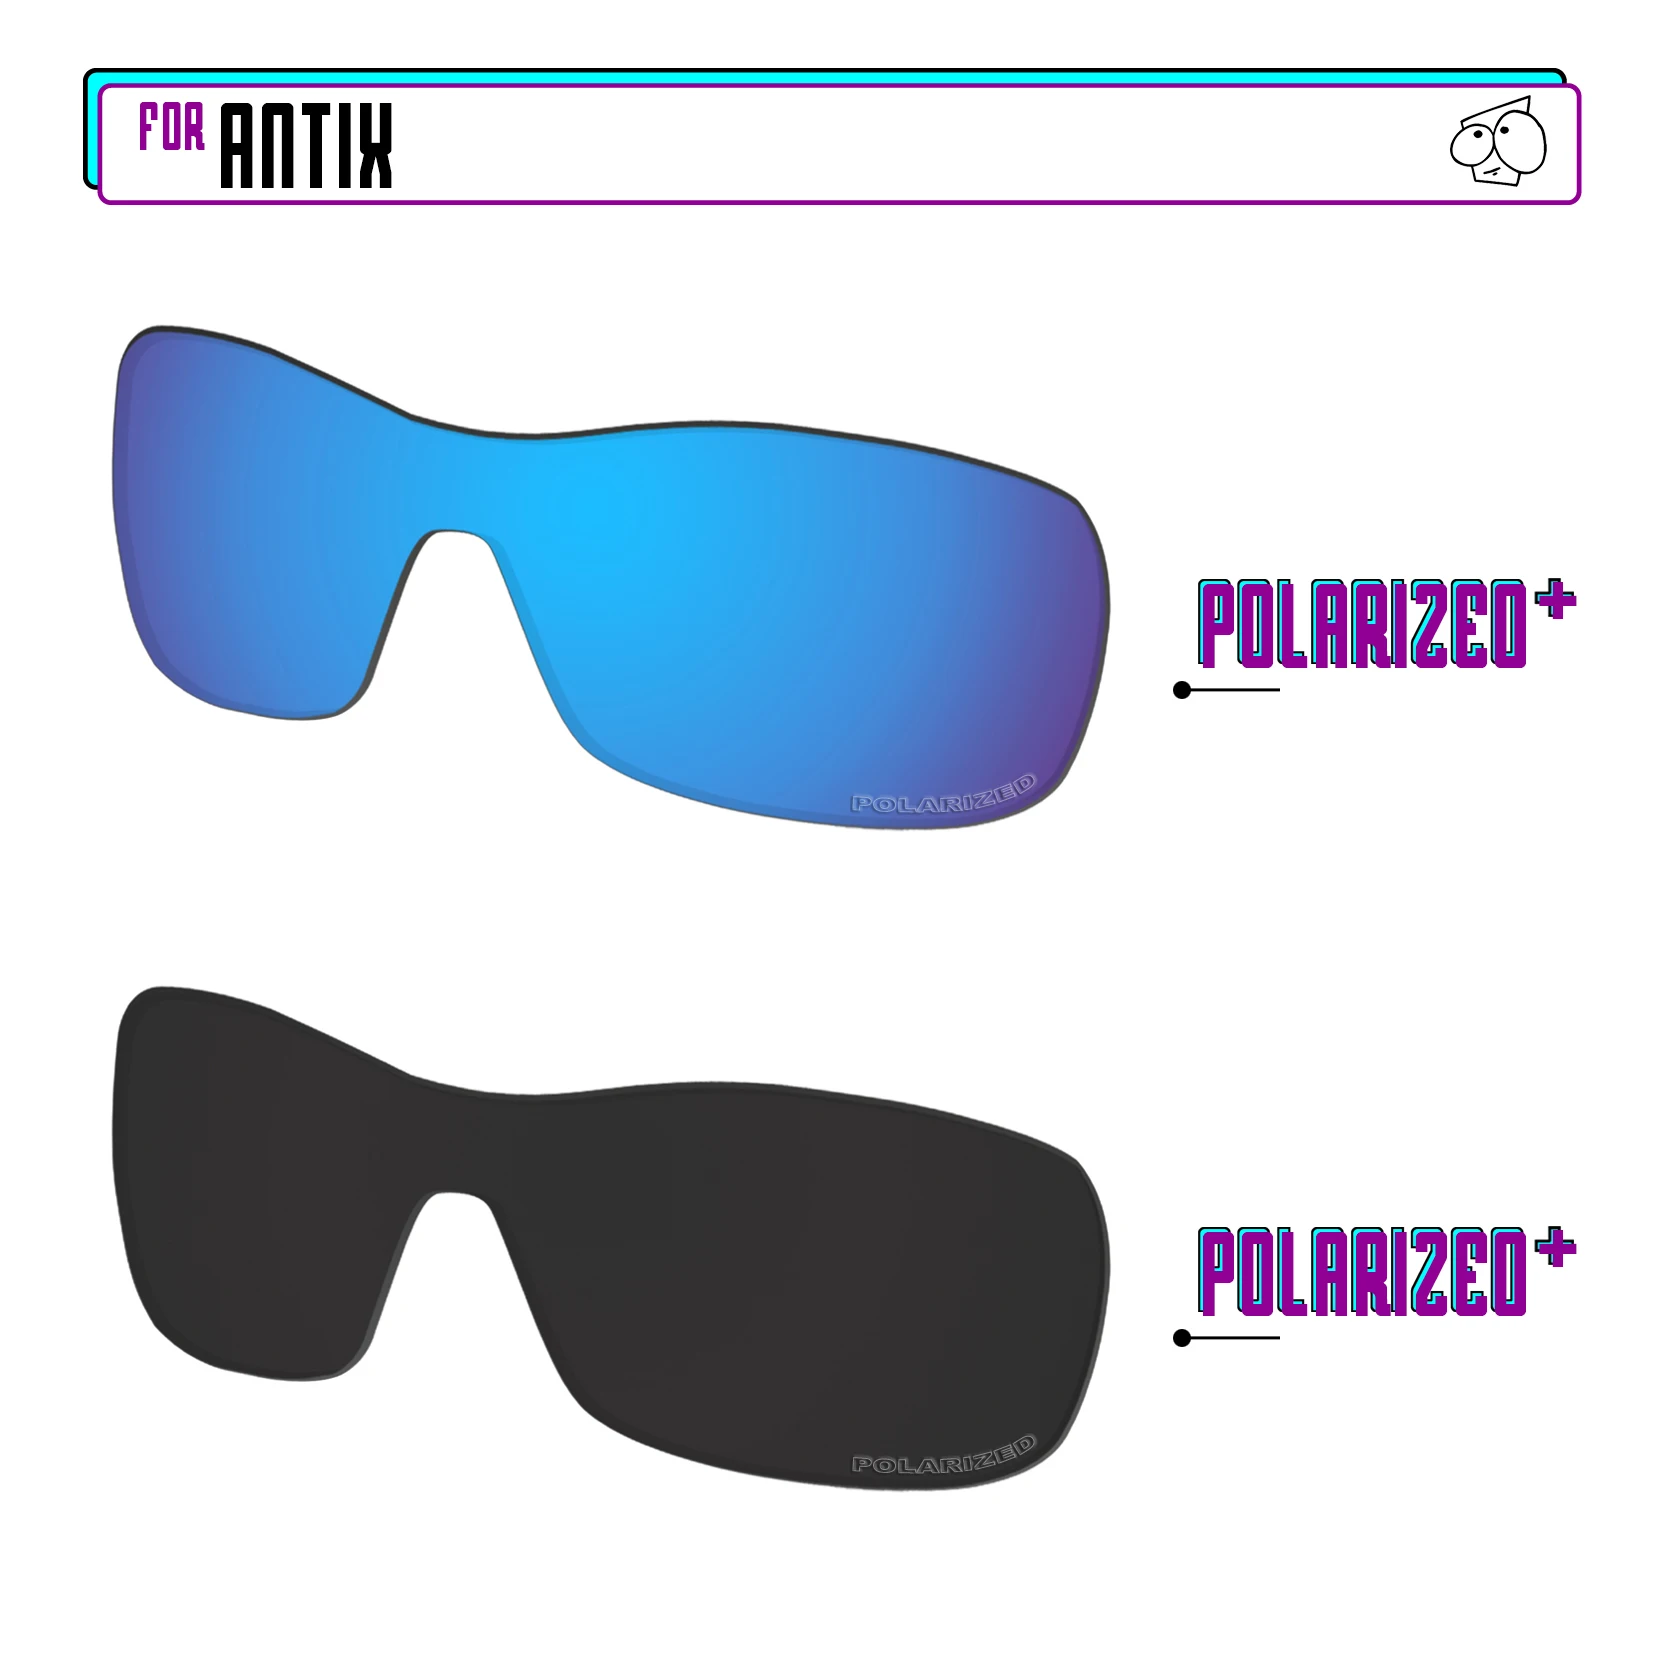 EZReplace Anti Seawater Polarized Replacement Lenses for - Oakley Antix Sunglasses - Black P Plus-Blue P Plus